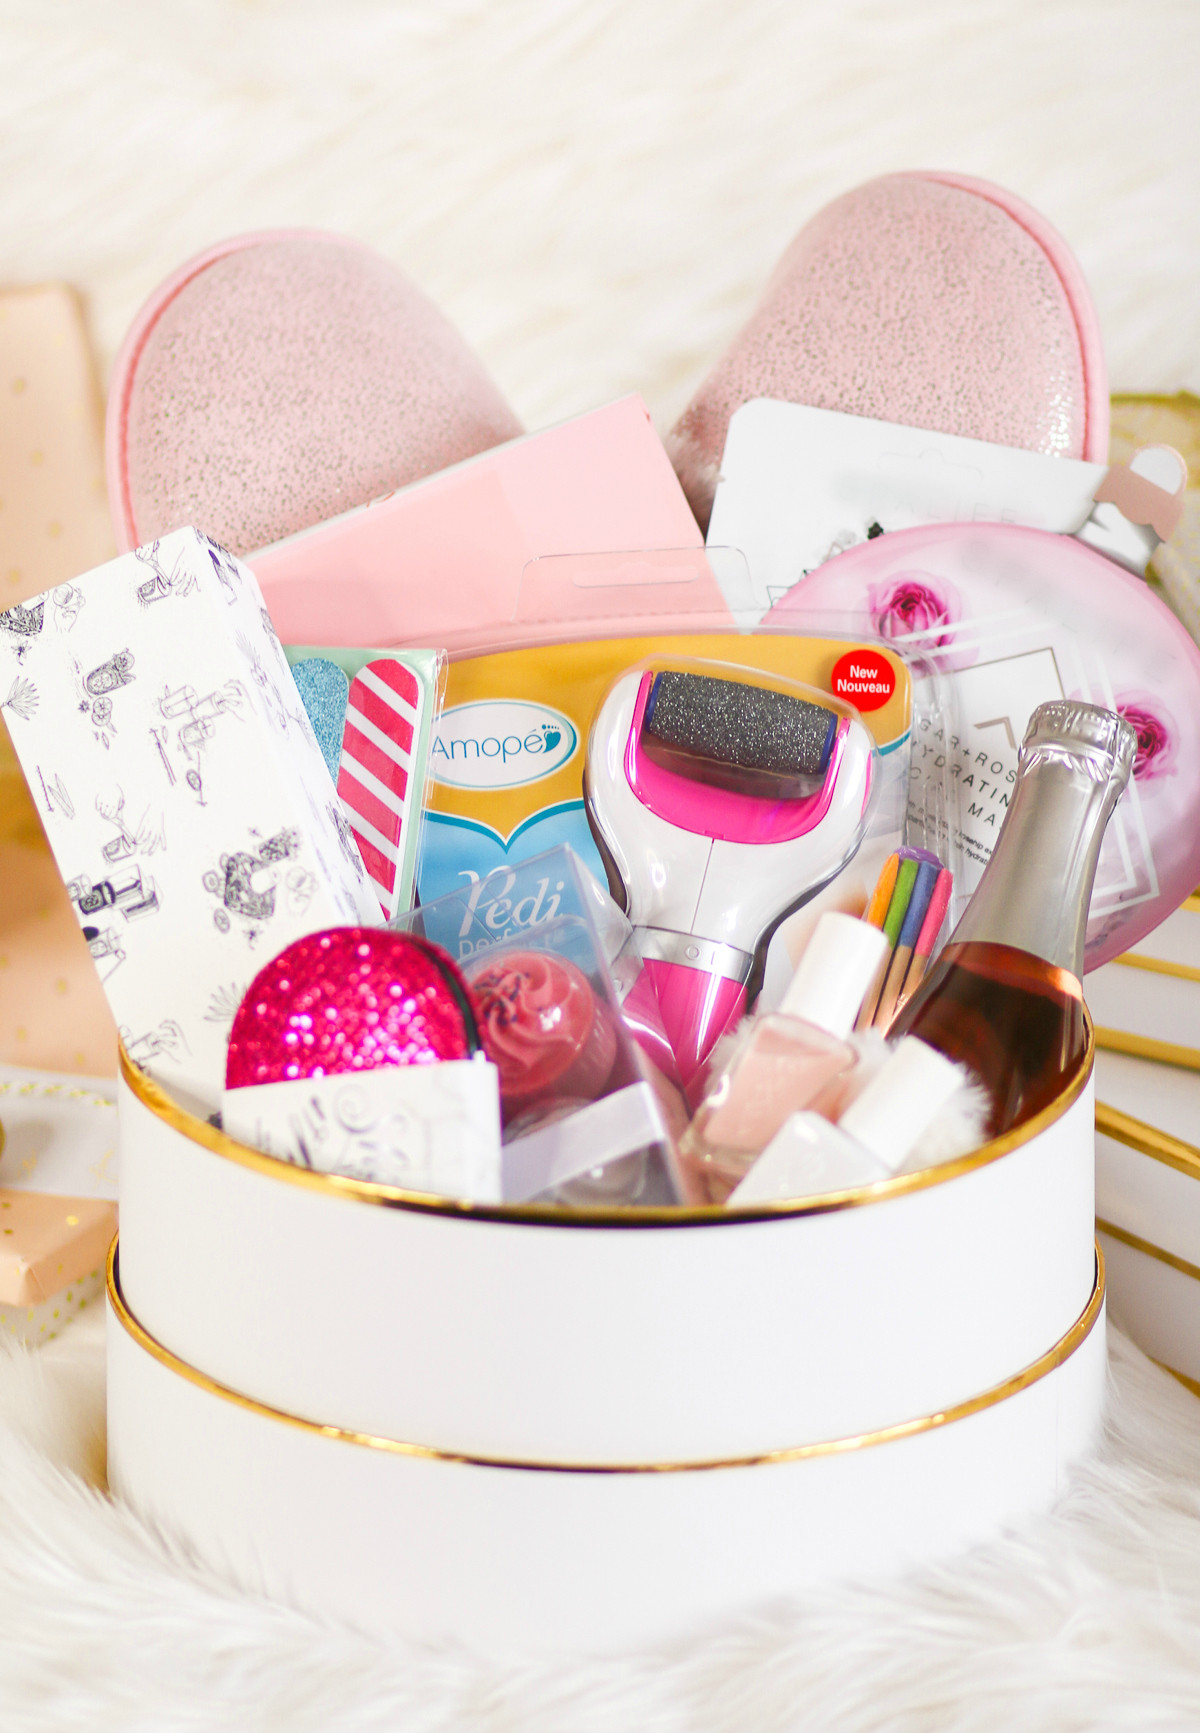 Spa Gift Basket Ideas Homemade
 DIY Spa Gift Basket 12 Self Care Gift Ideas She’ll Love